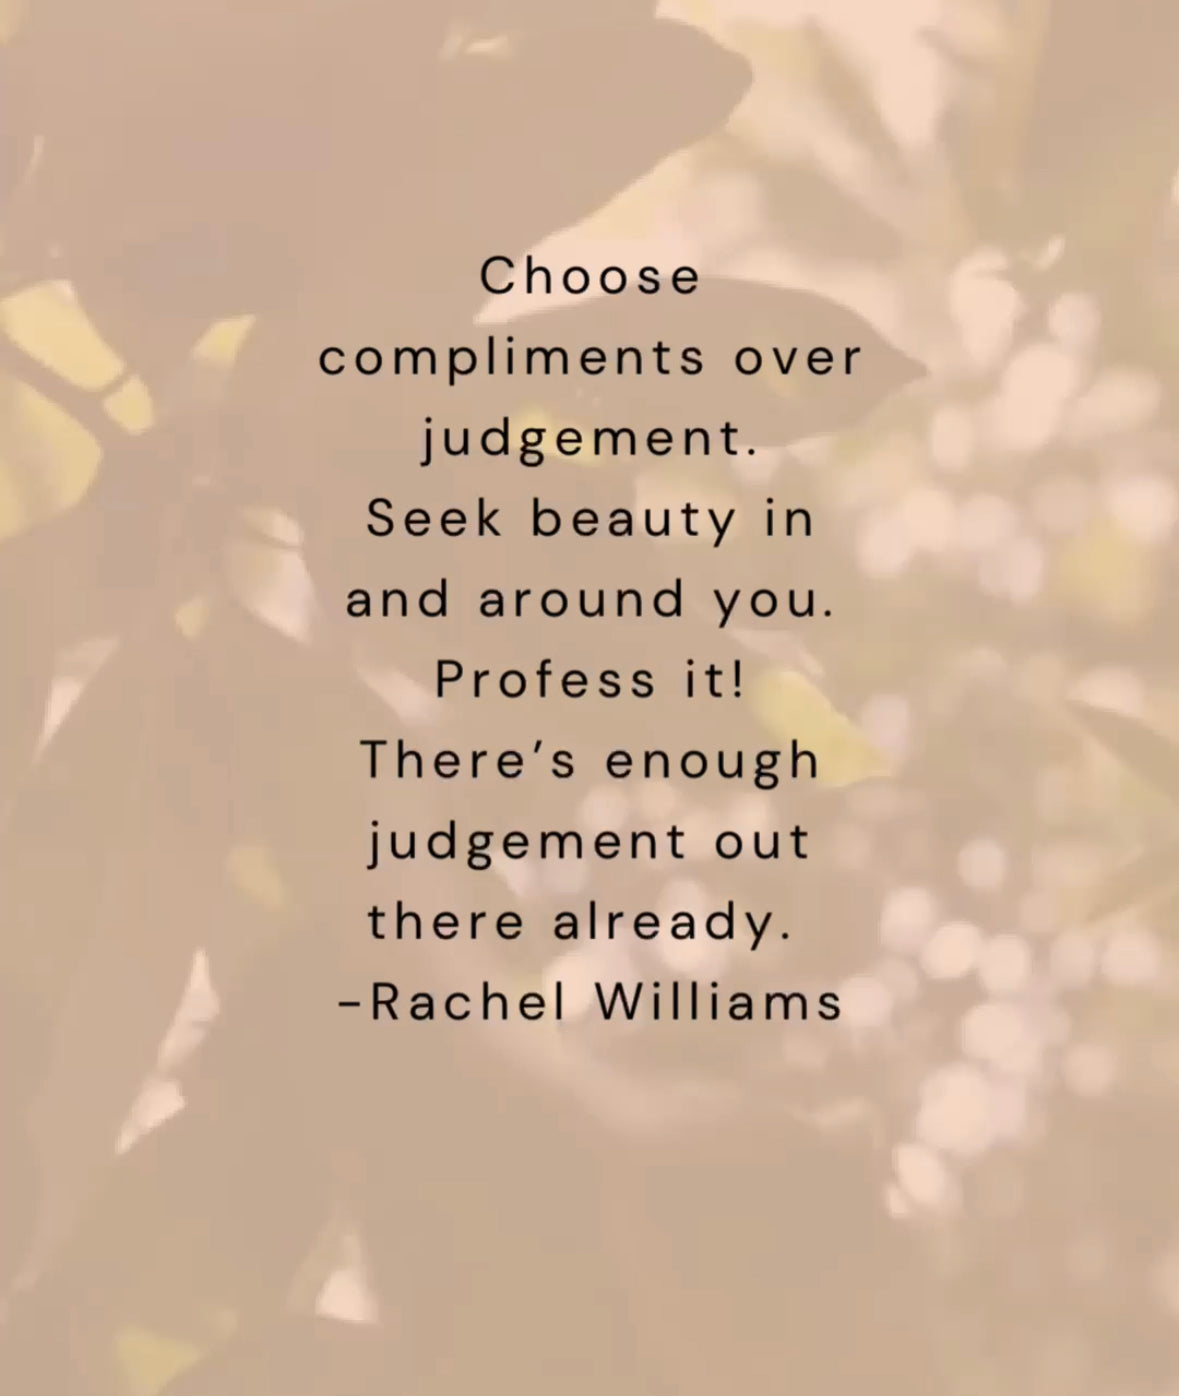 Compliments over Judgement